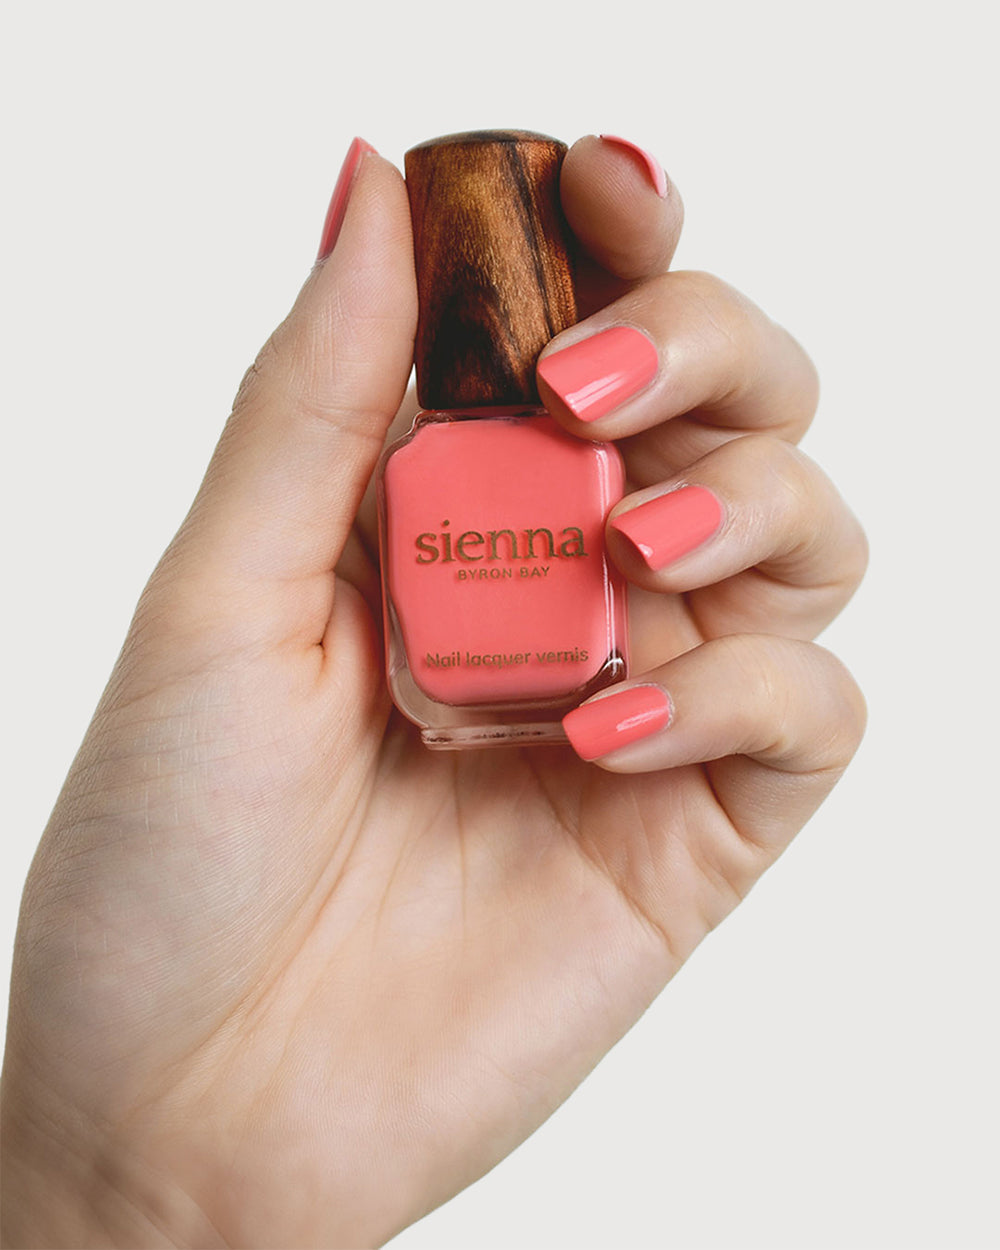 grapefruit pink nail polish swatch on fair skin tone by sienna